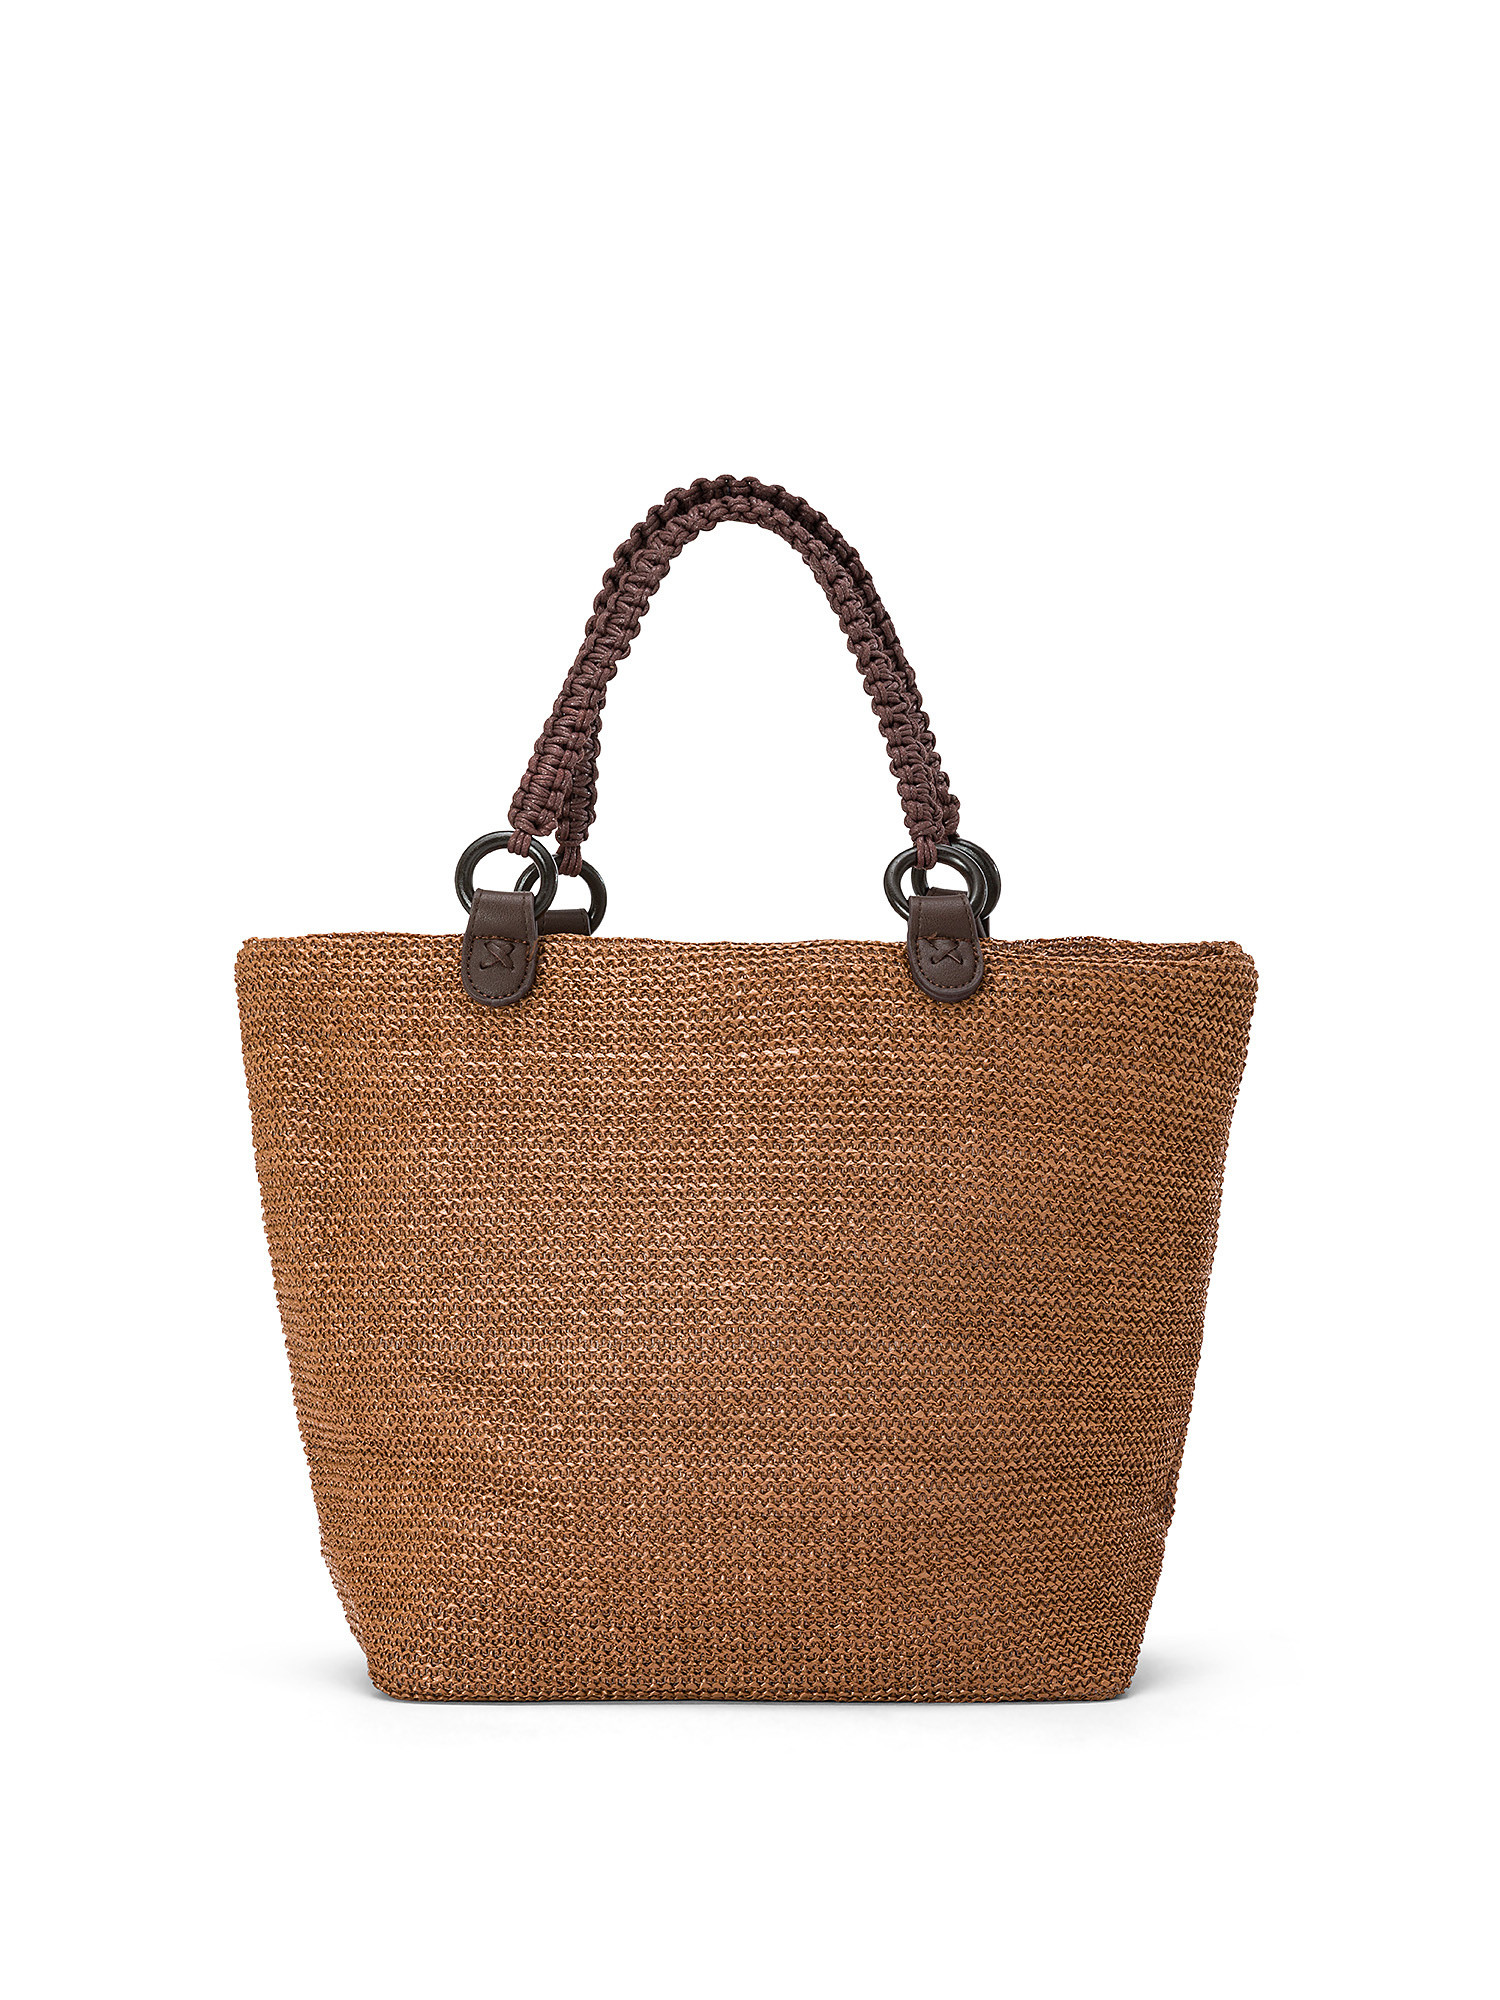 Koan - Shopping bag, Marrone, large image number 0